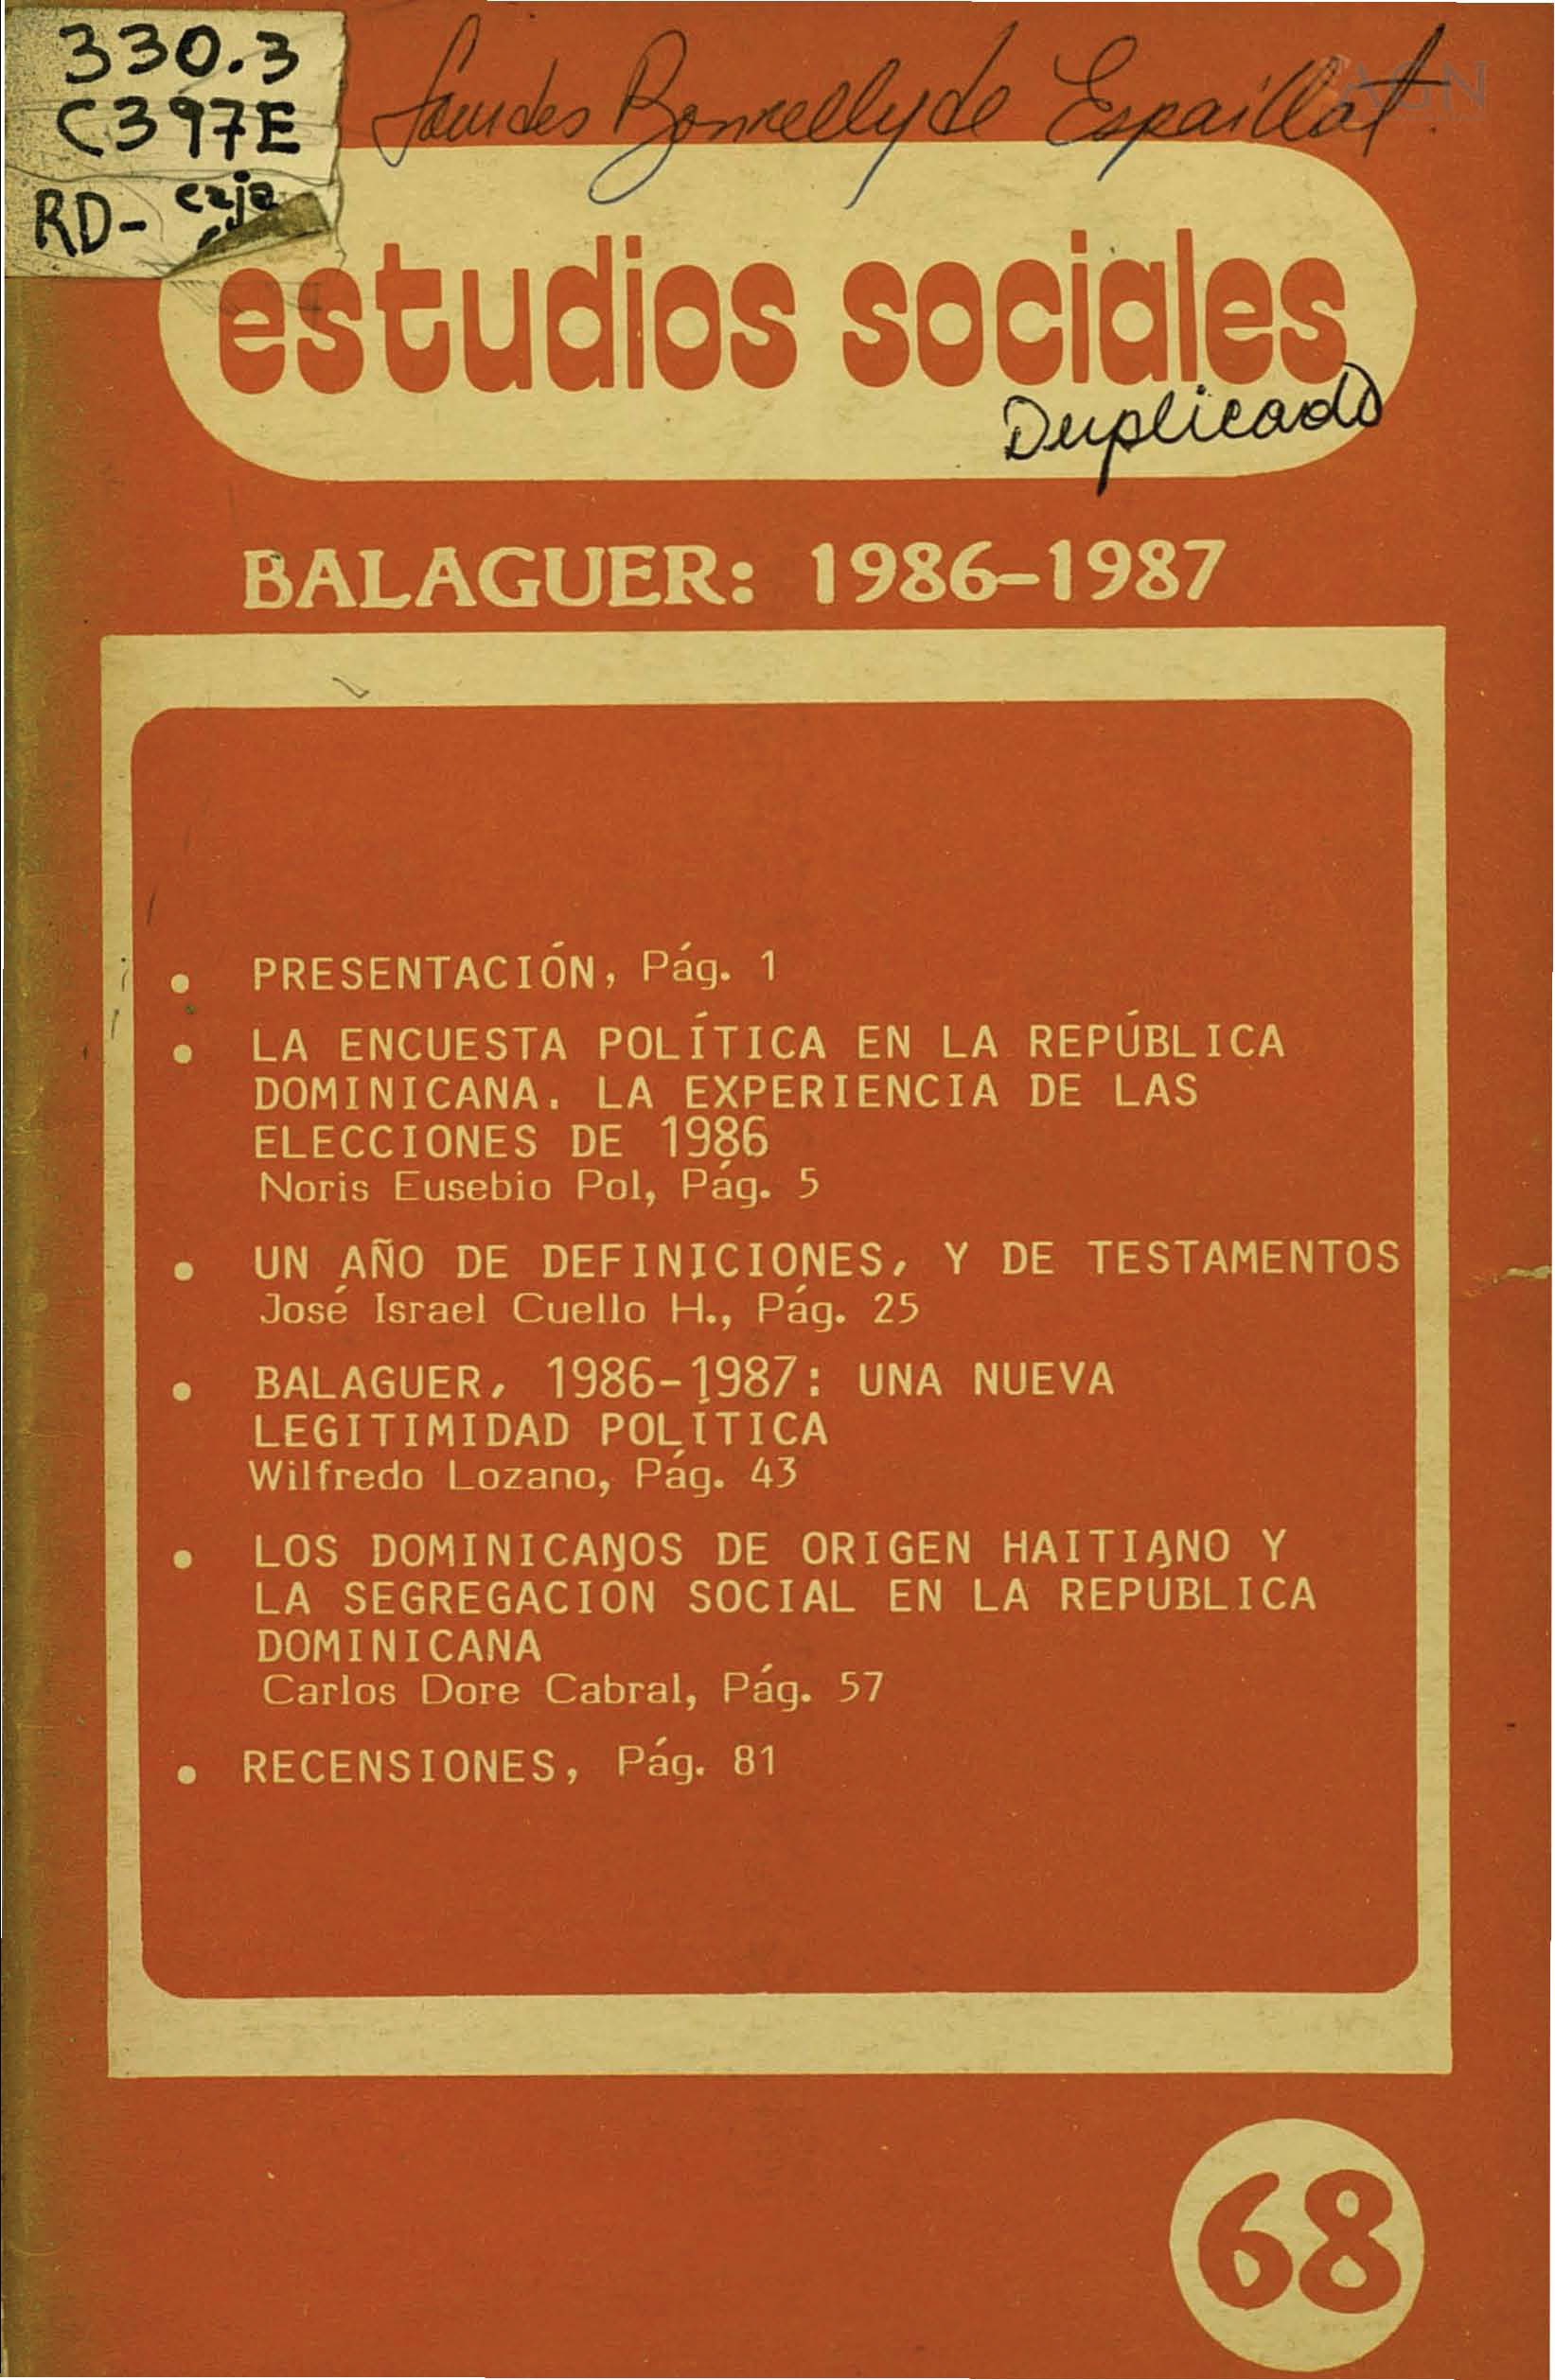 						View Vol. 20 No. 68 (1987): Balaguer: 1986-1987
					